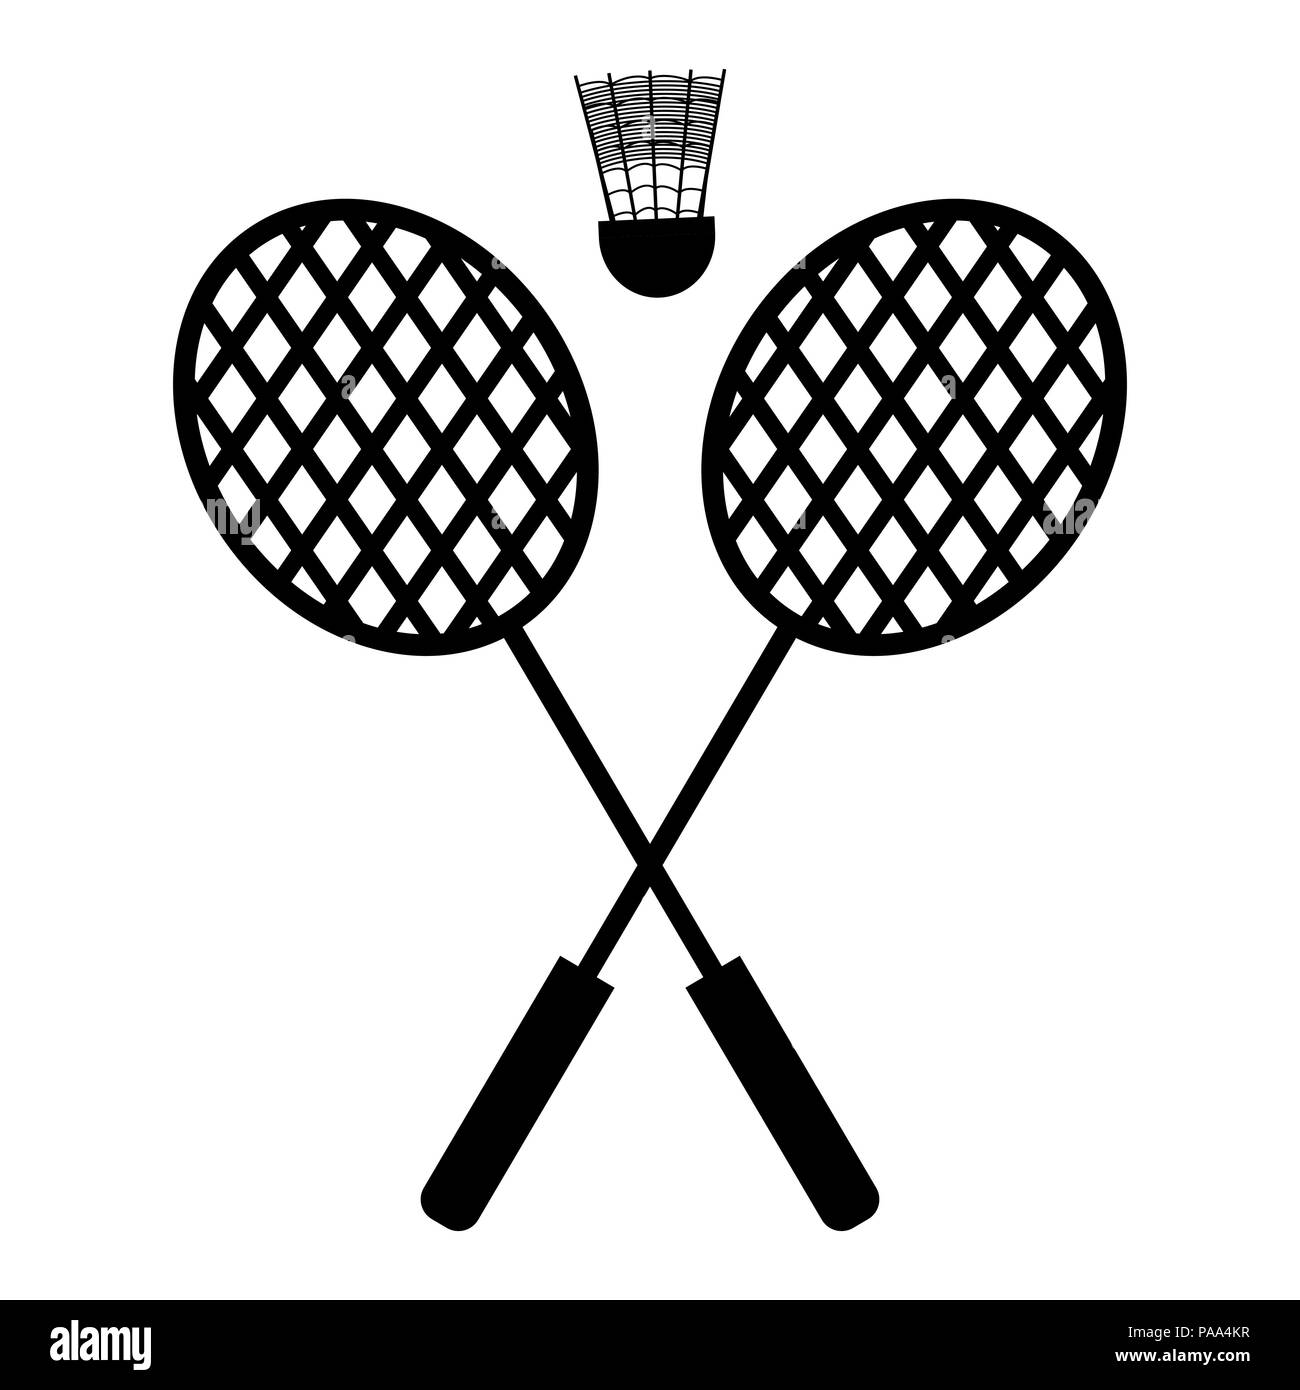 Playing badminton racket Stock Vector